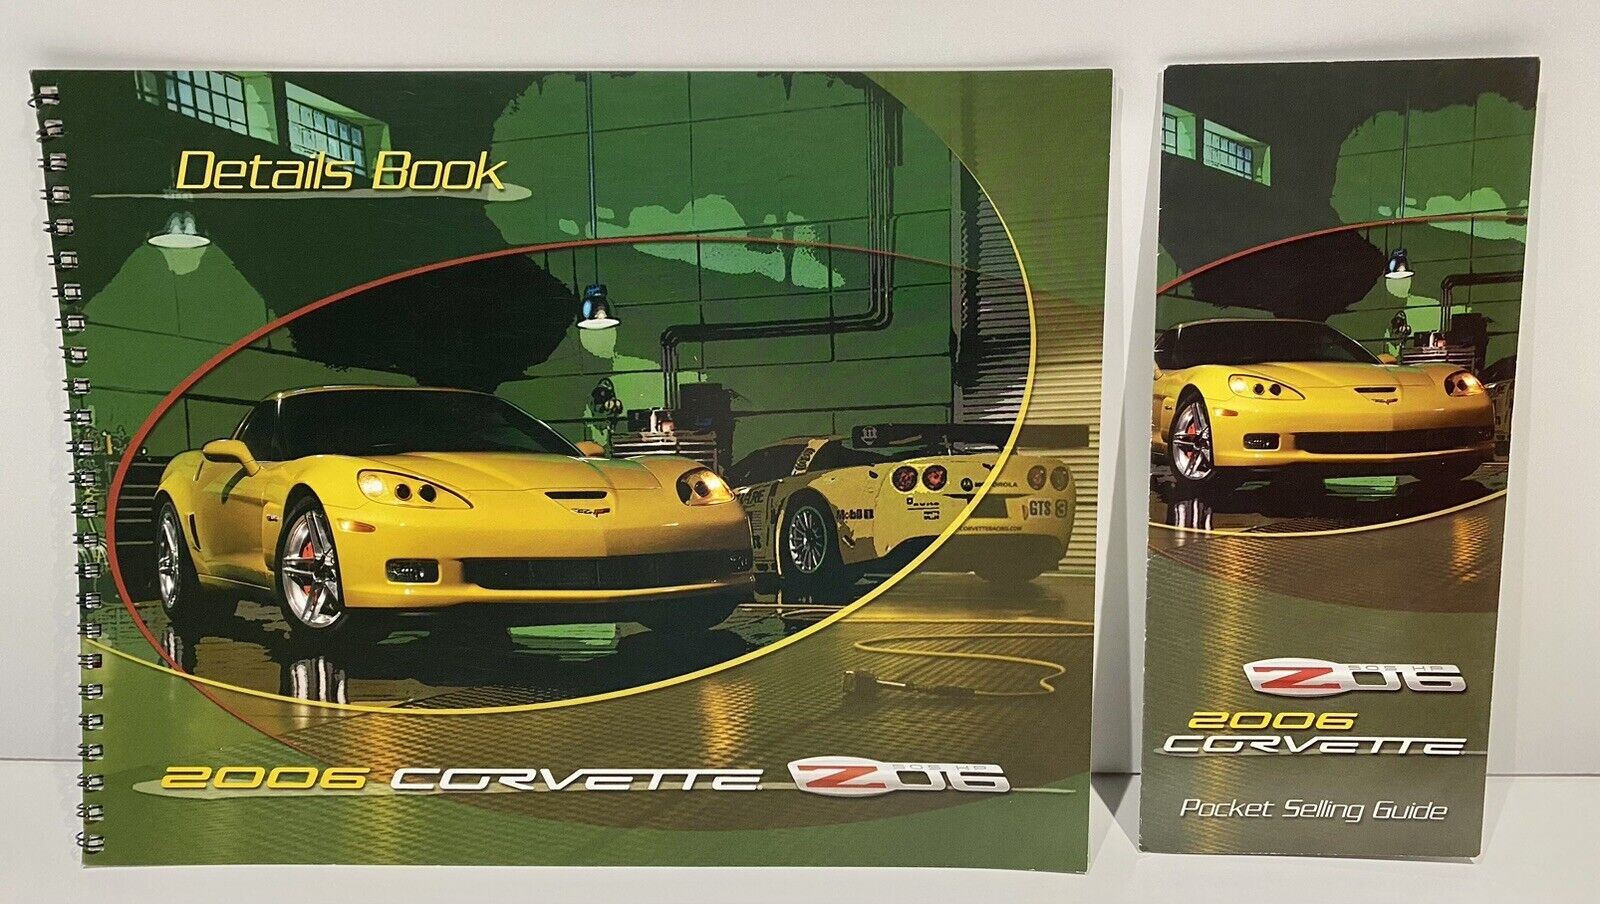 2006 Chevrolet Corvette Z06 Details Data Facts Sales Brochure & Pocket Guide